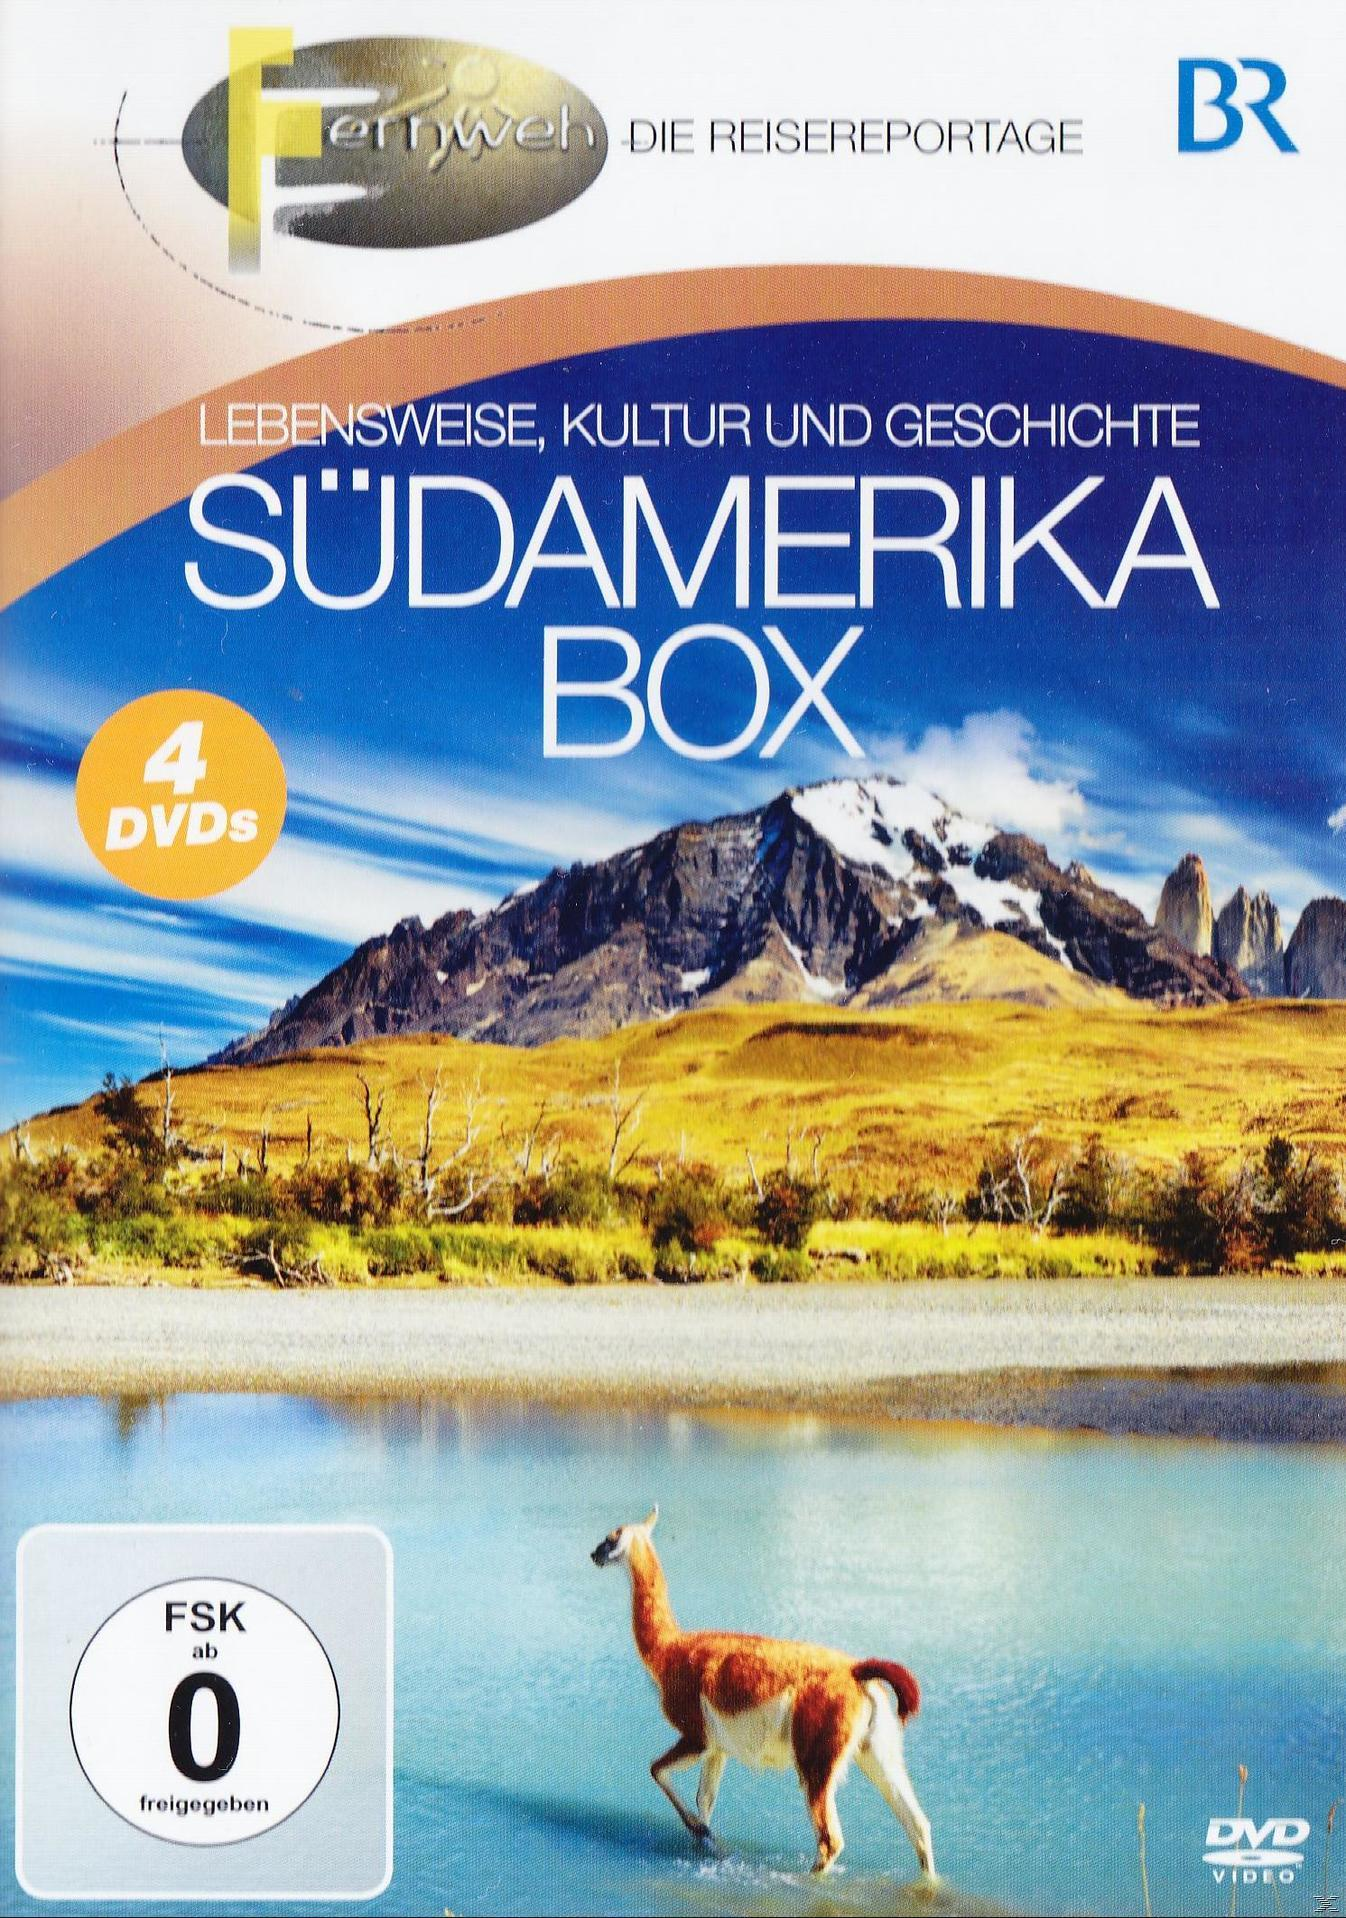 Suedamerika Box DVD